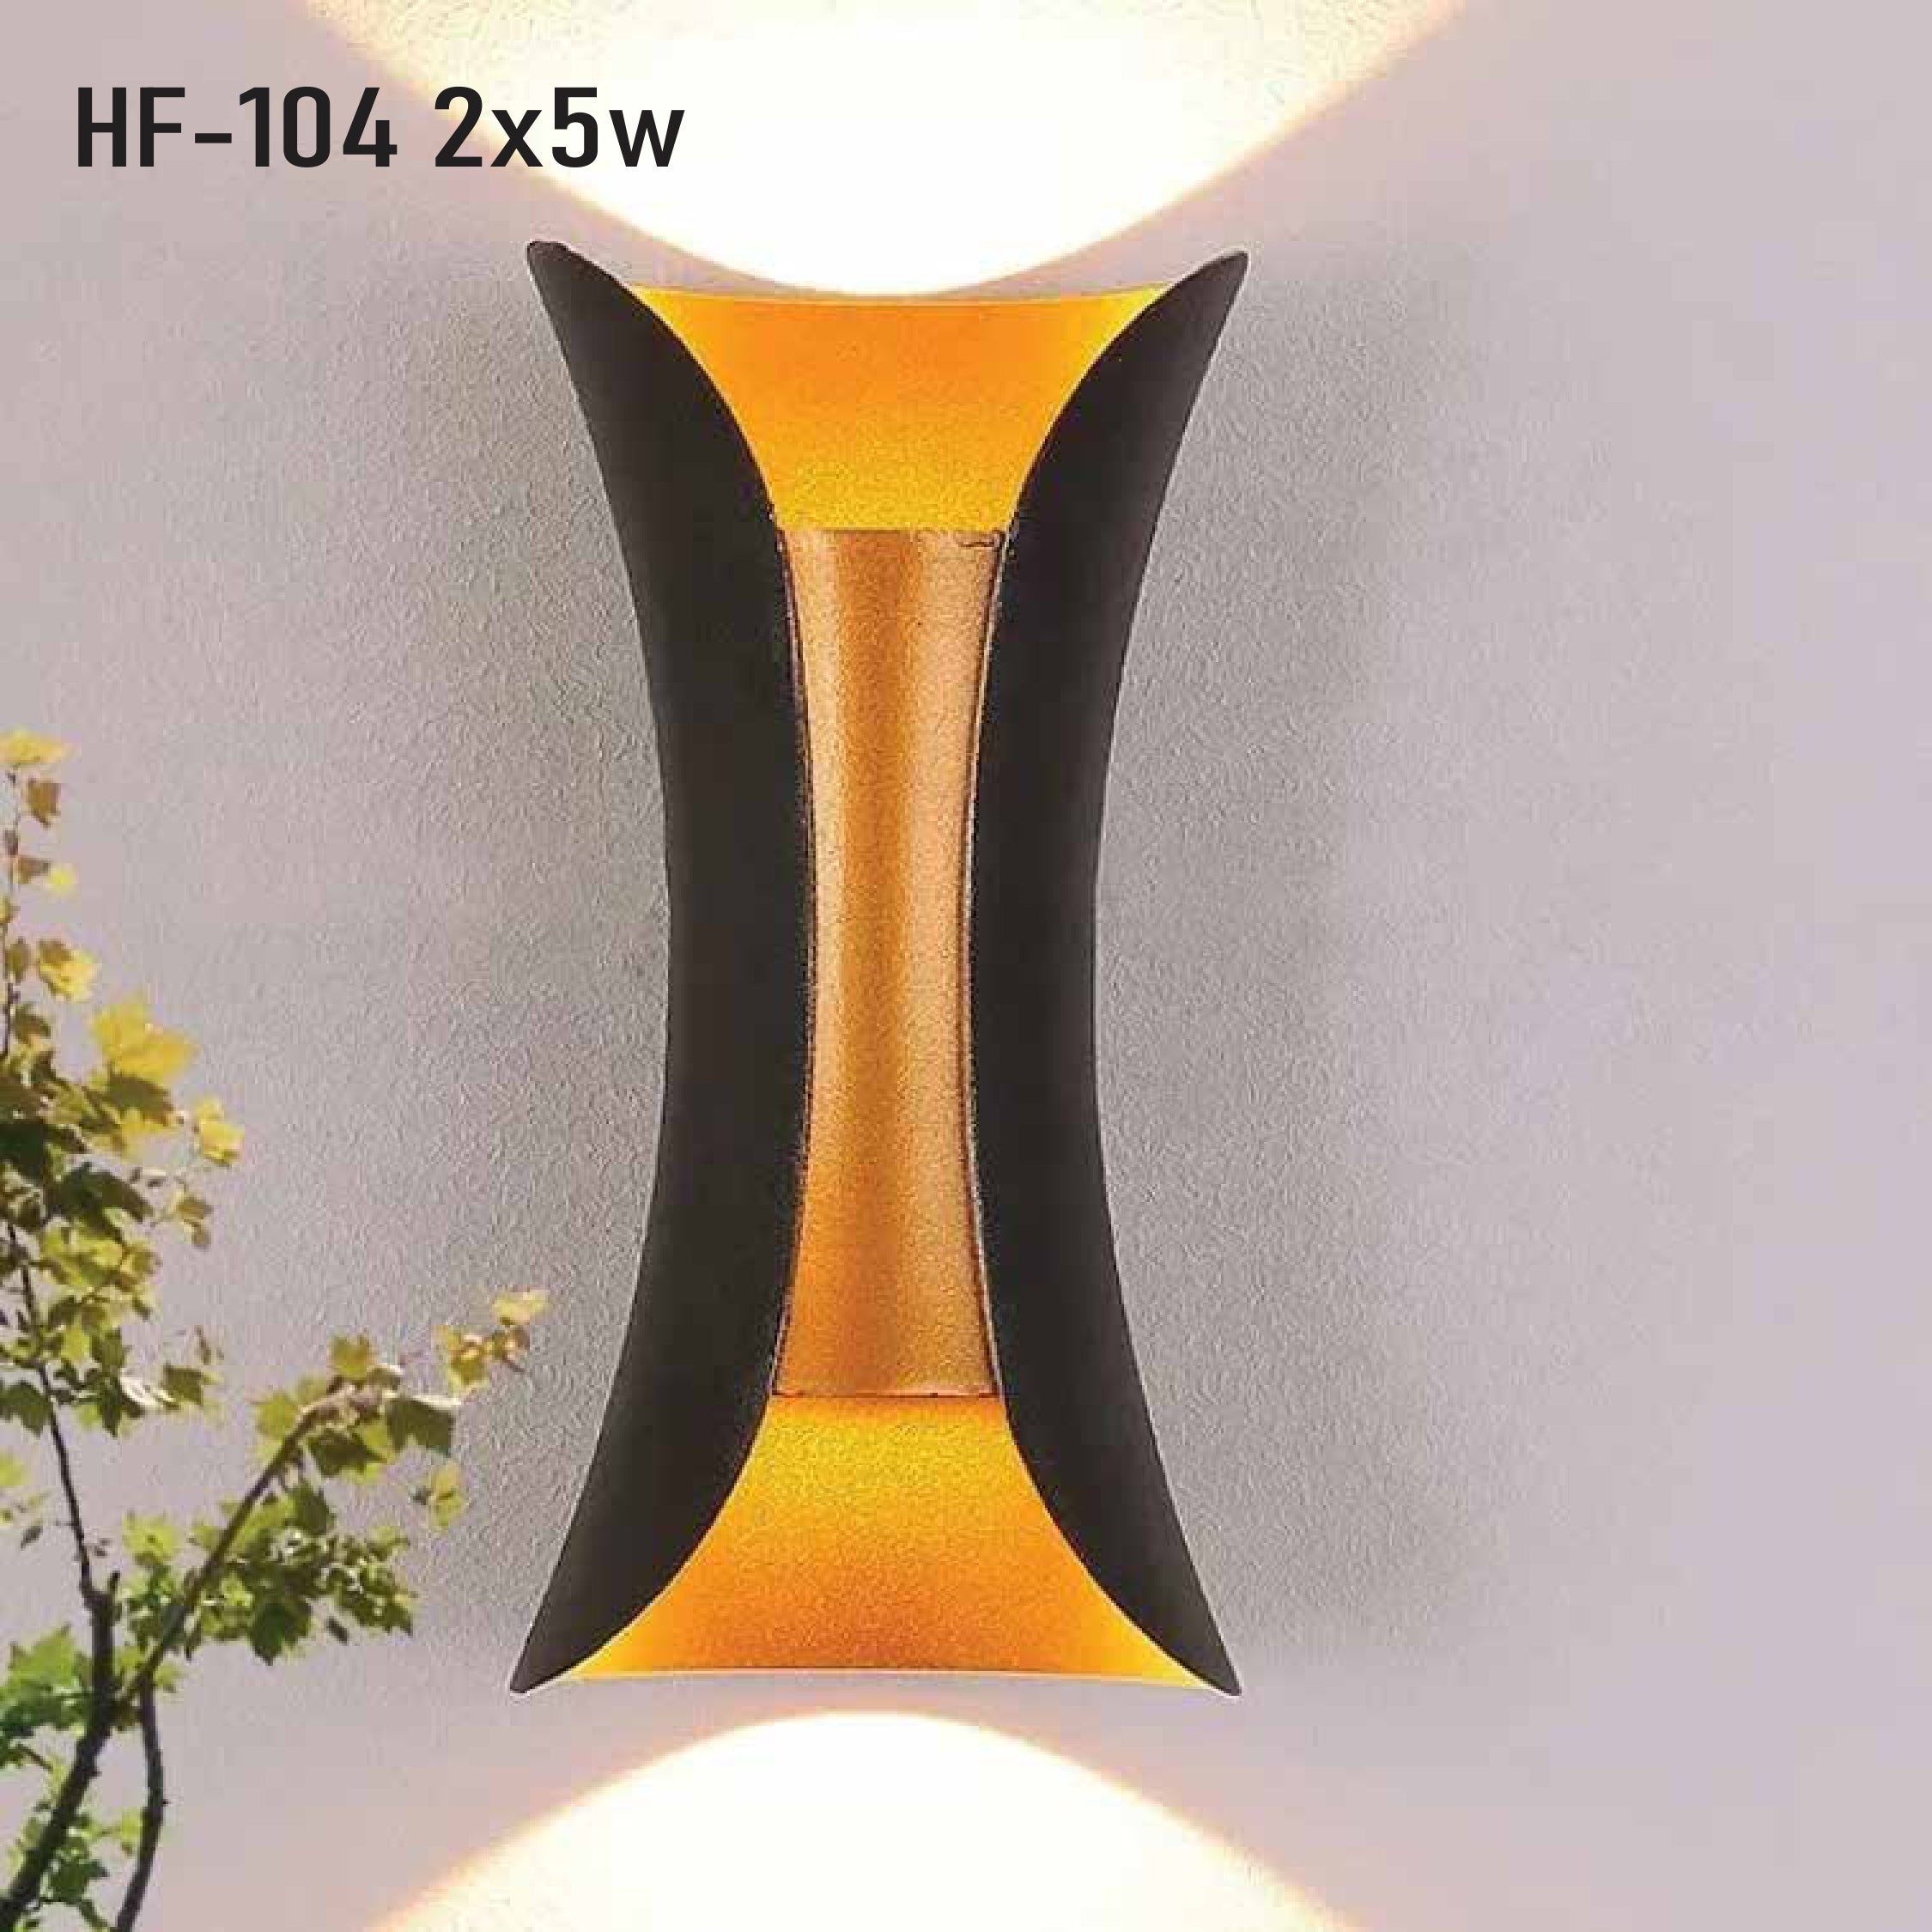 LED Outdoor Wall Light | HF-104 2x5W